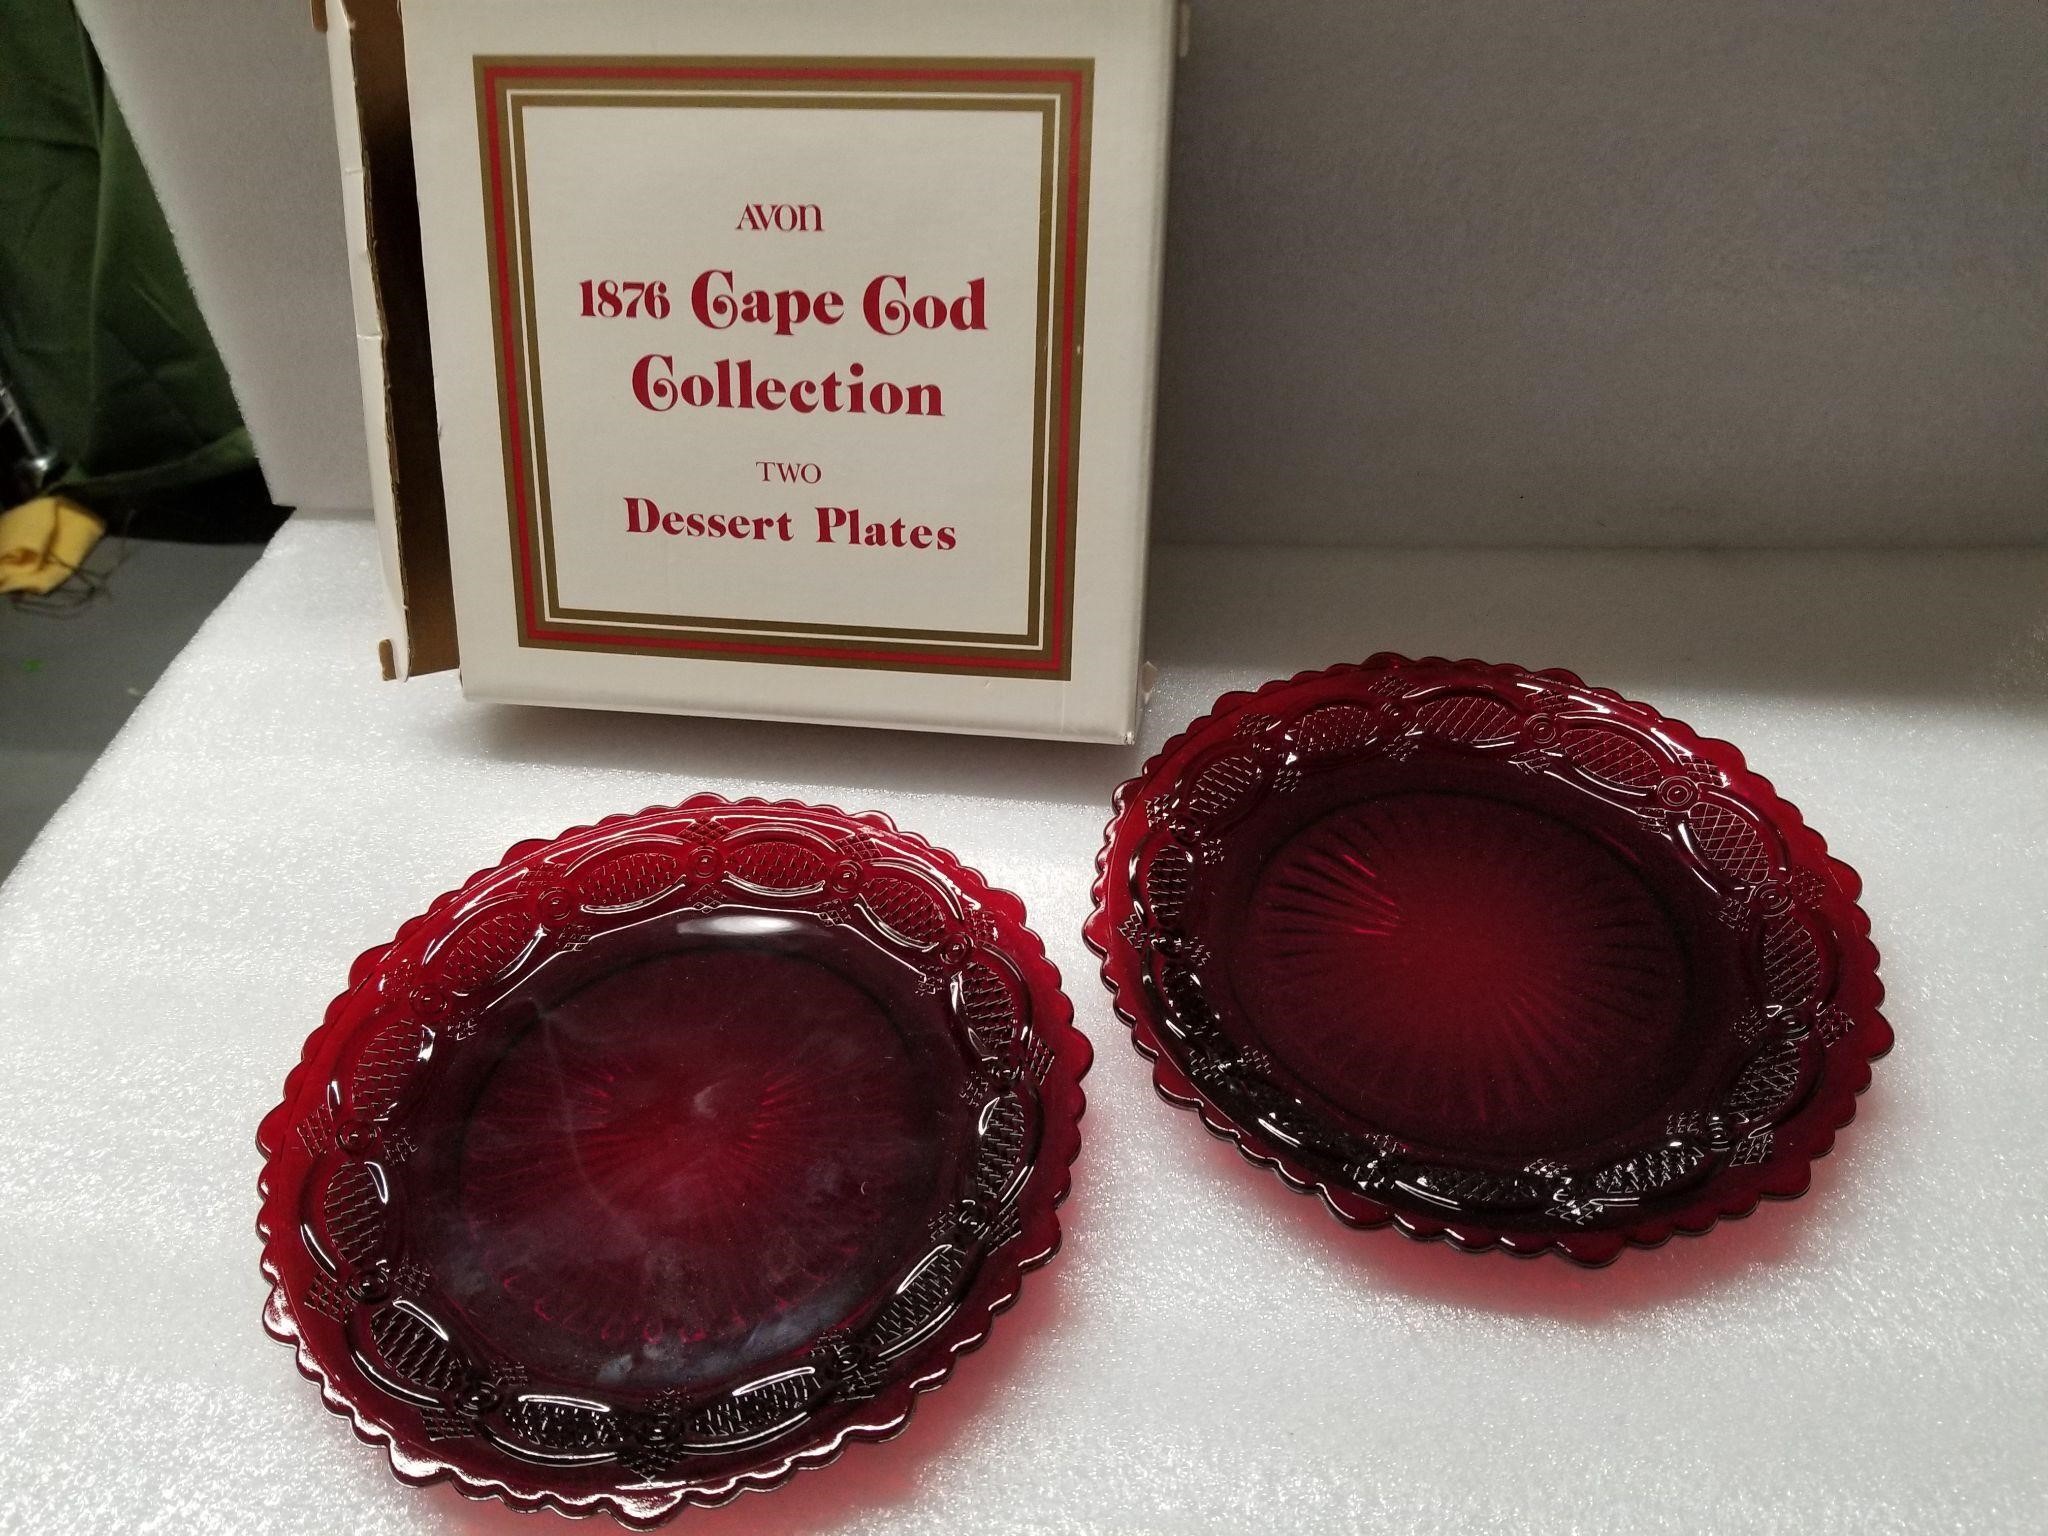 1876 Cape Cod Collection Dessert Plates